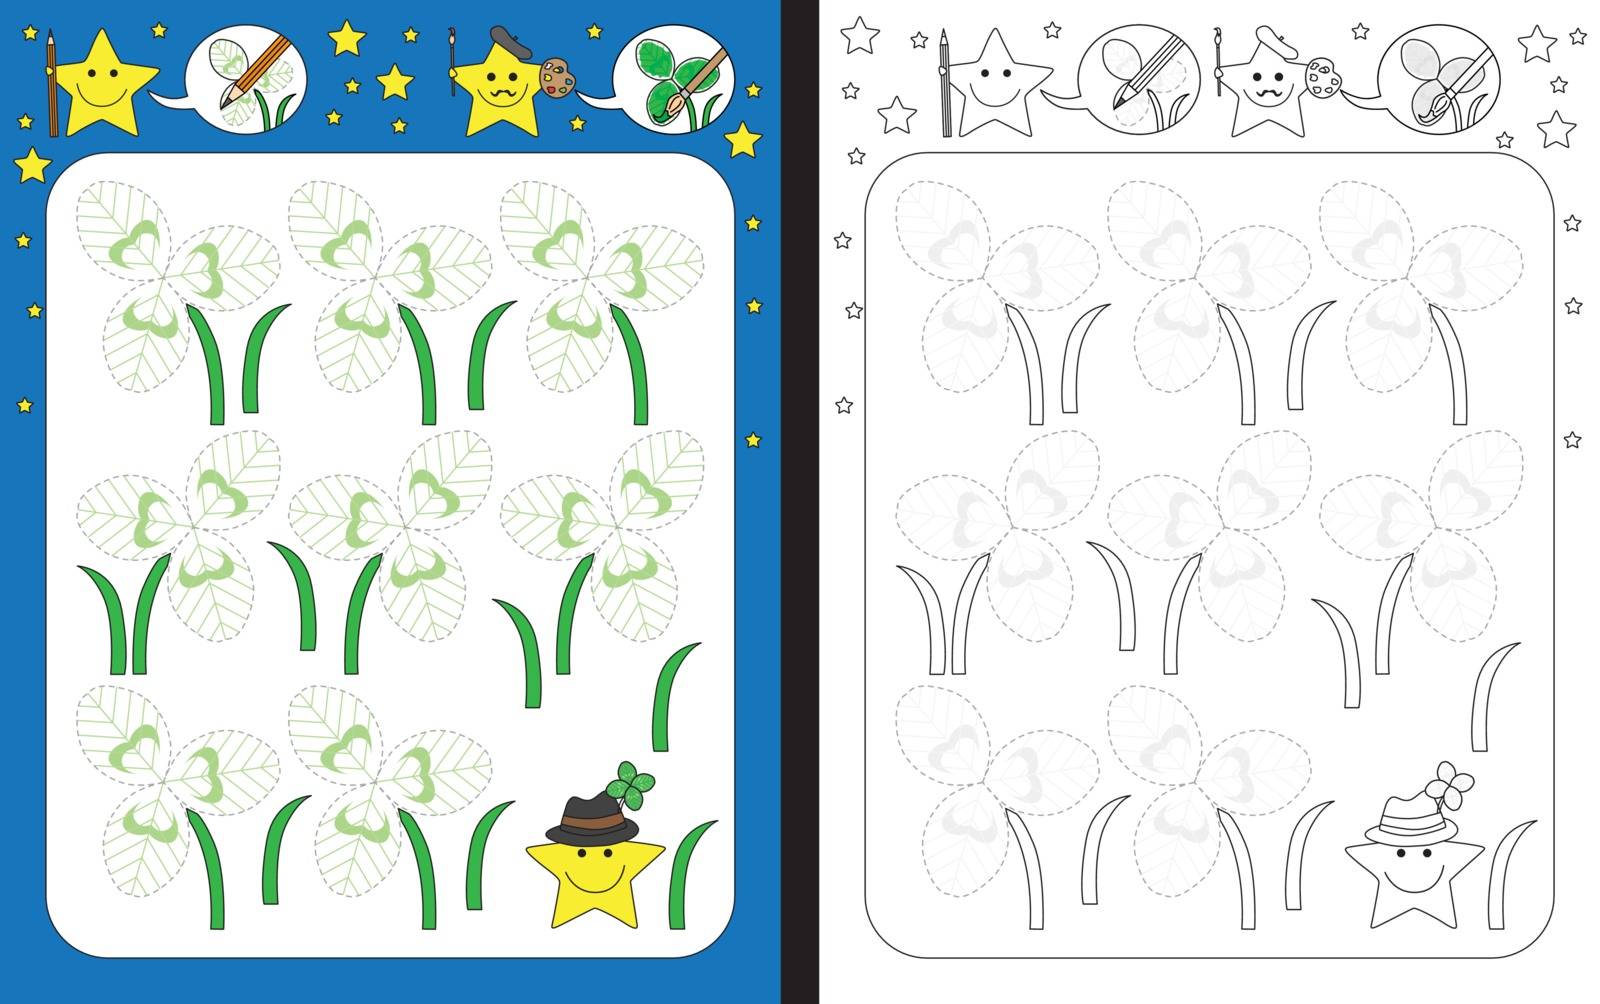 Preschool worksheet for practicing fine motor skills - tracing dashed lines of illustrated clover leaves